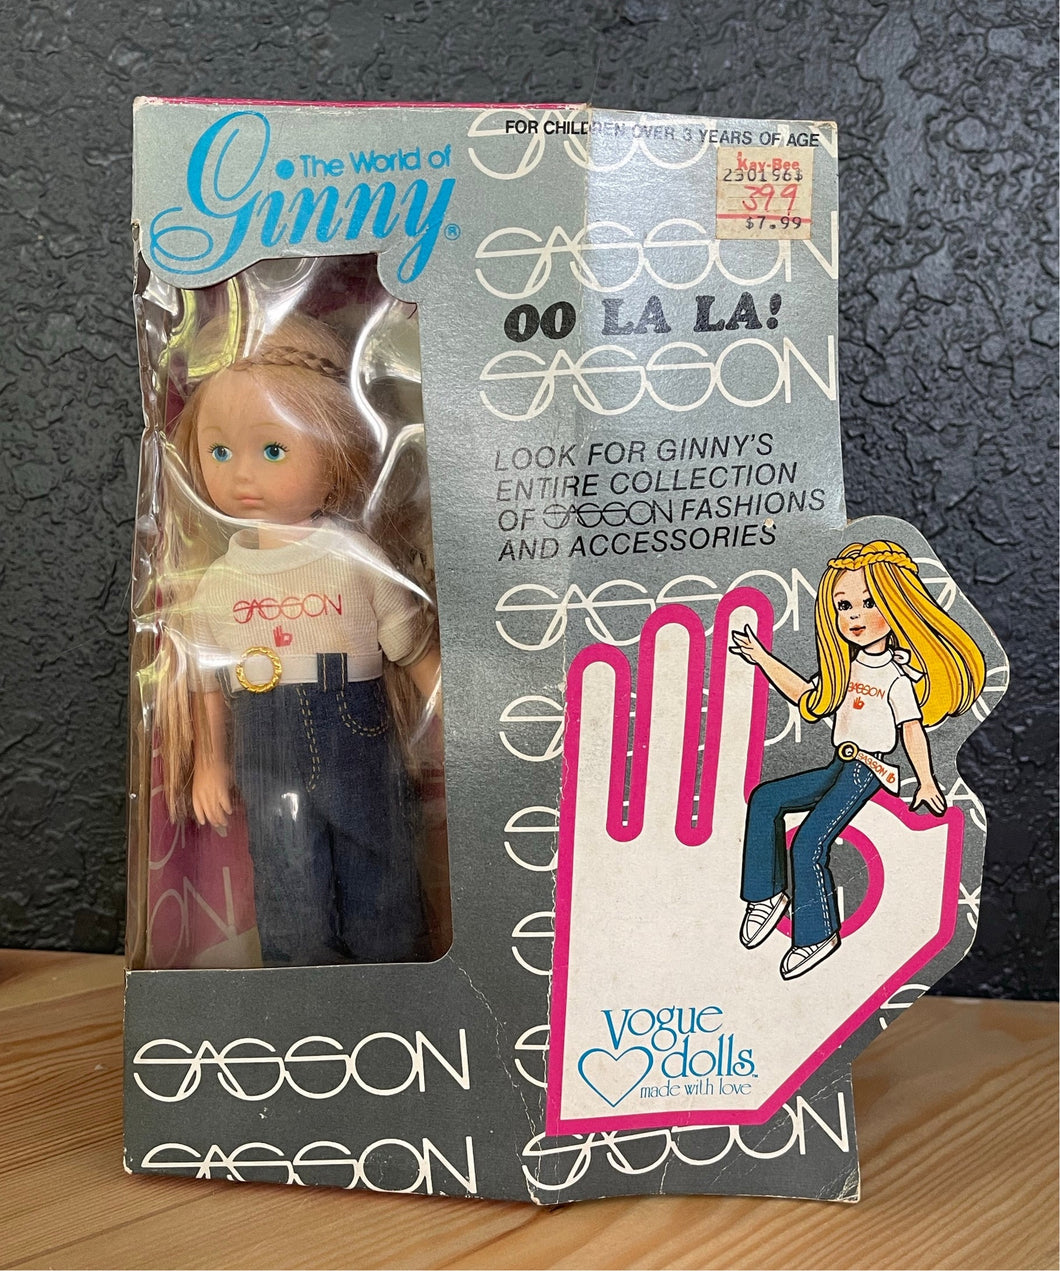 Vintage The World of Ginny Oo La La Sasoon Doll New in Box